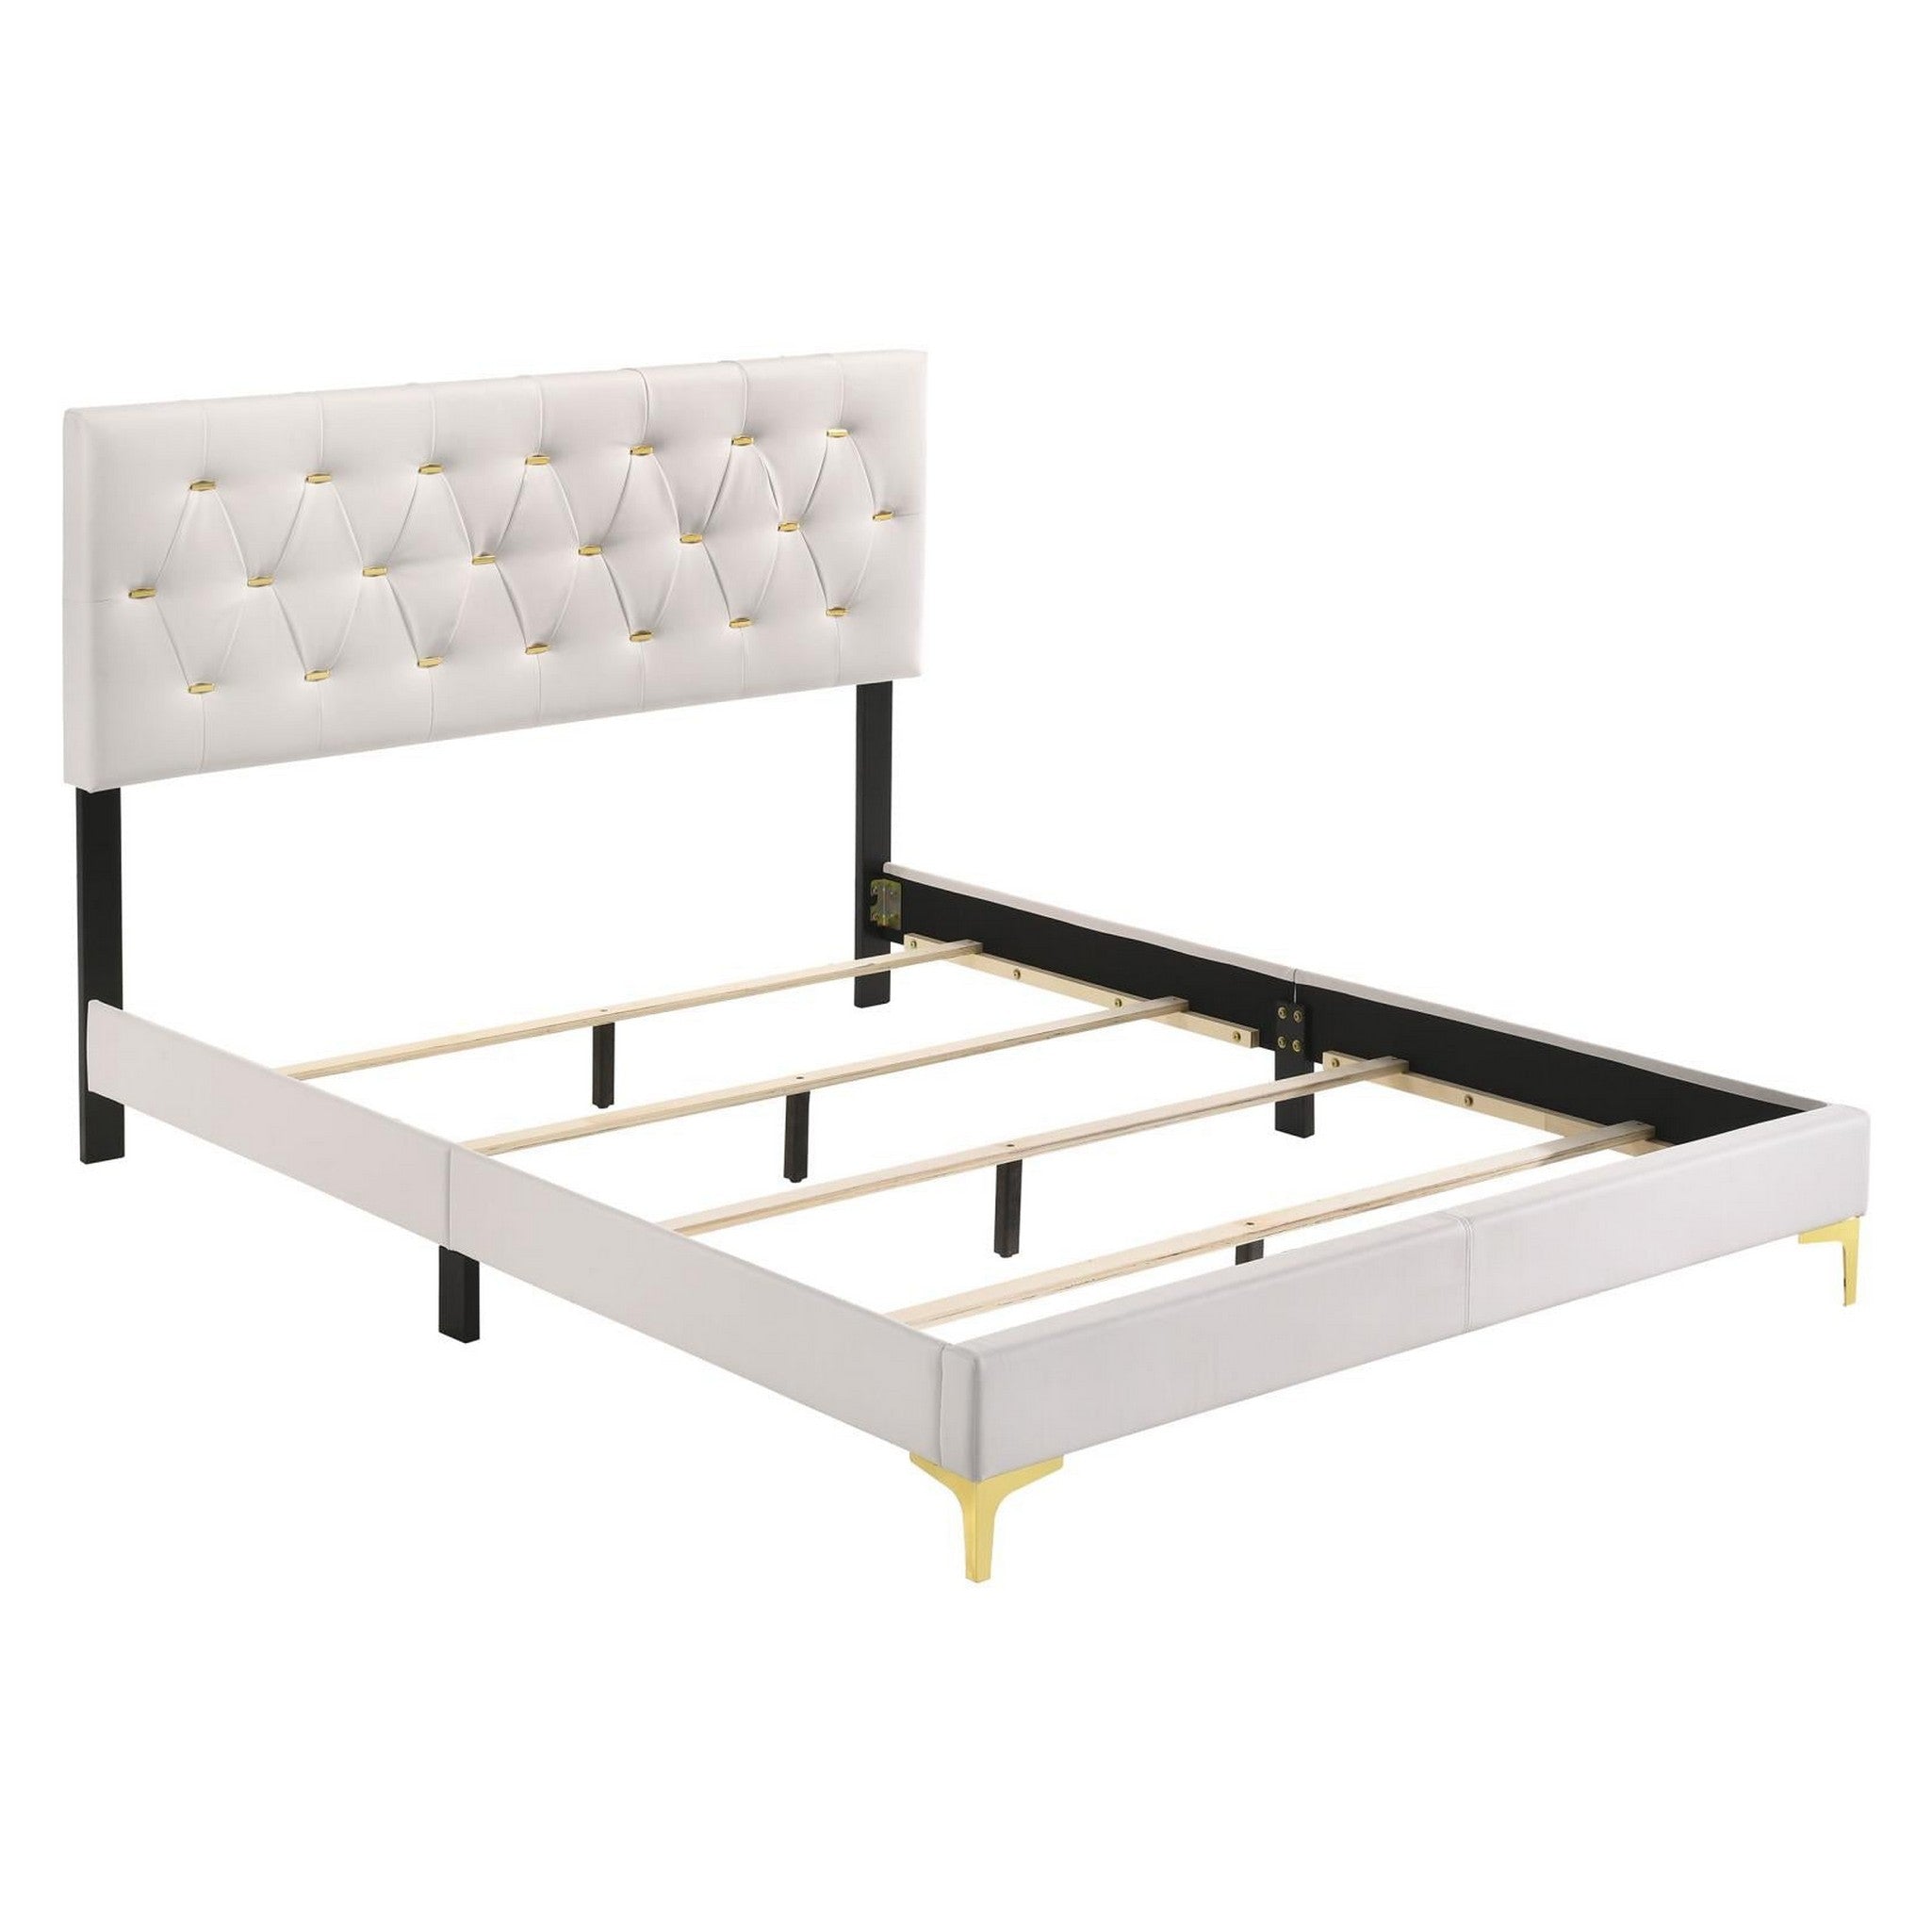 Kendall 5-piece Eastern King Bedroom Set White 224401KE-S5